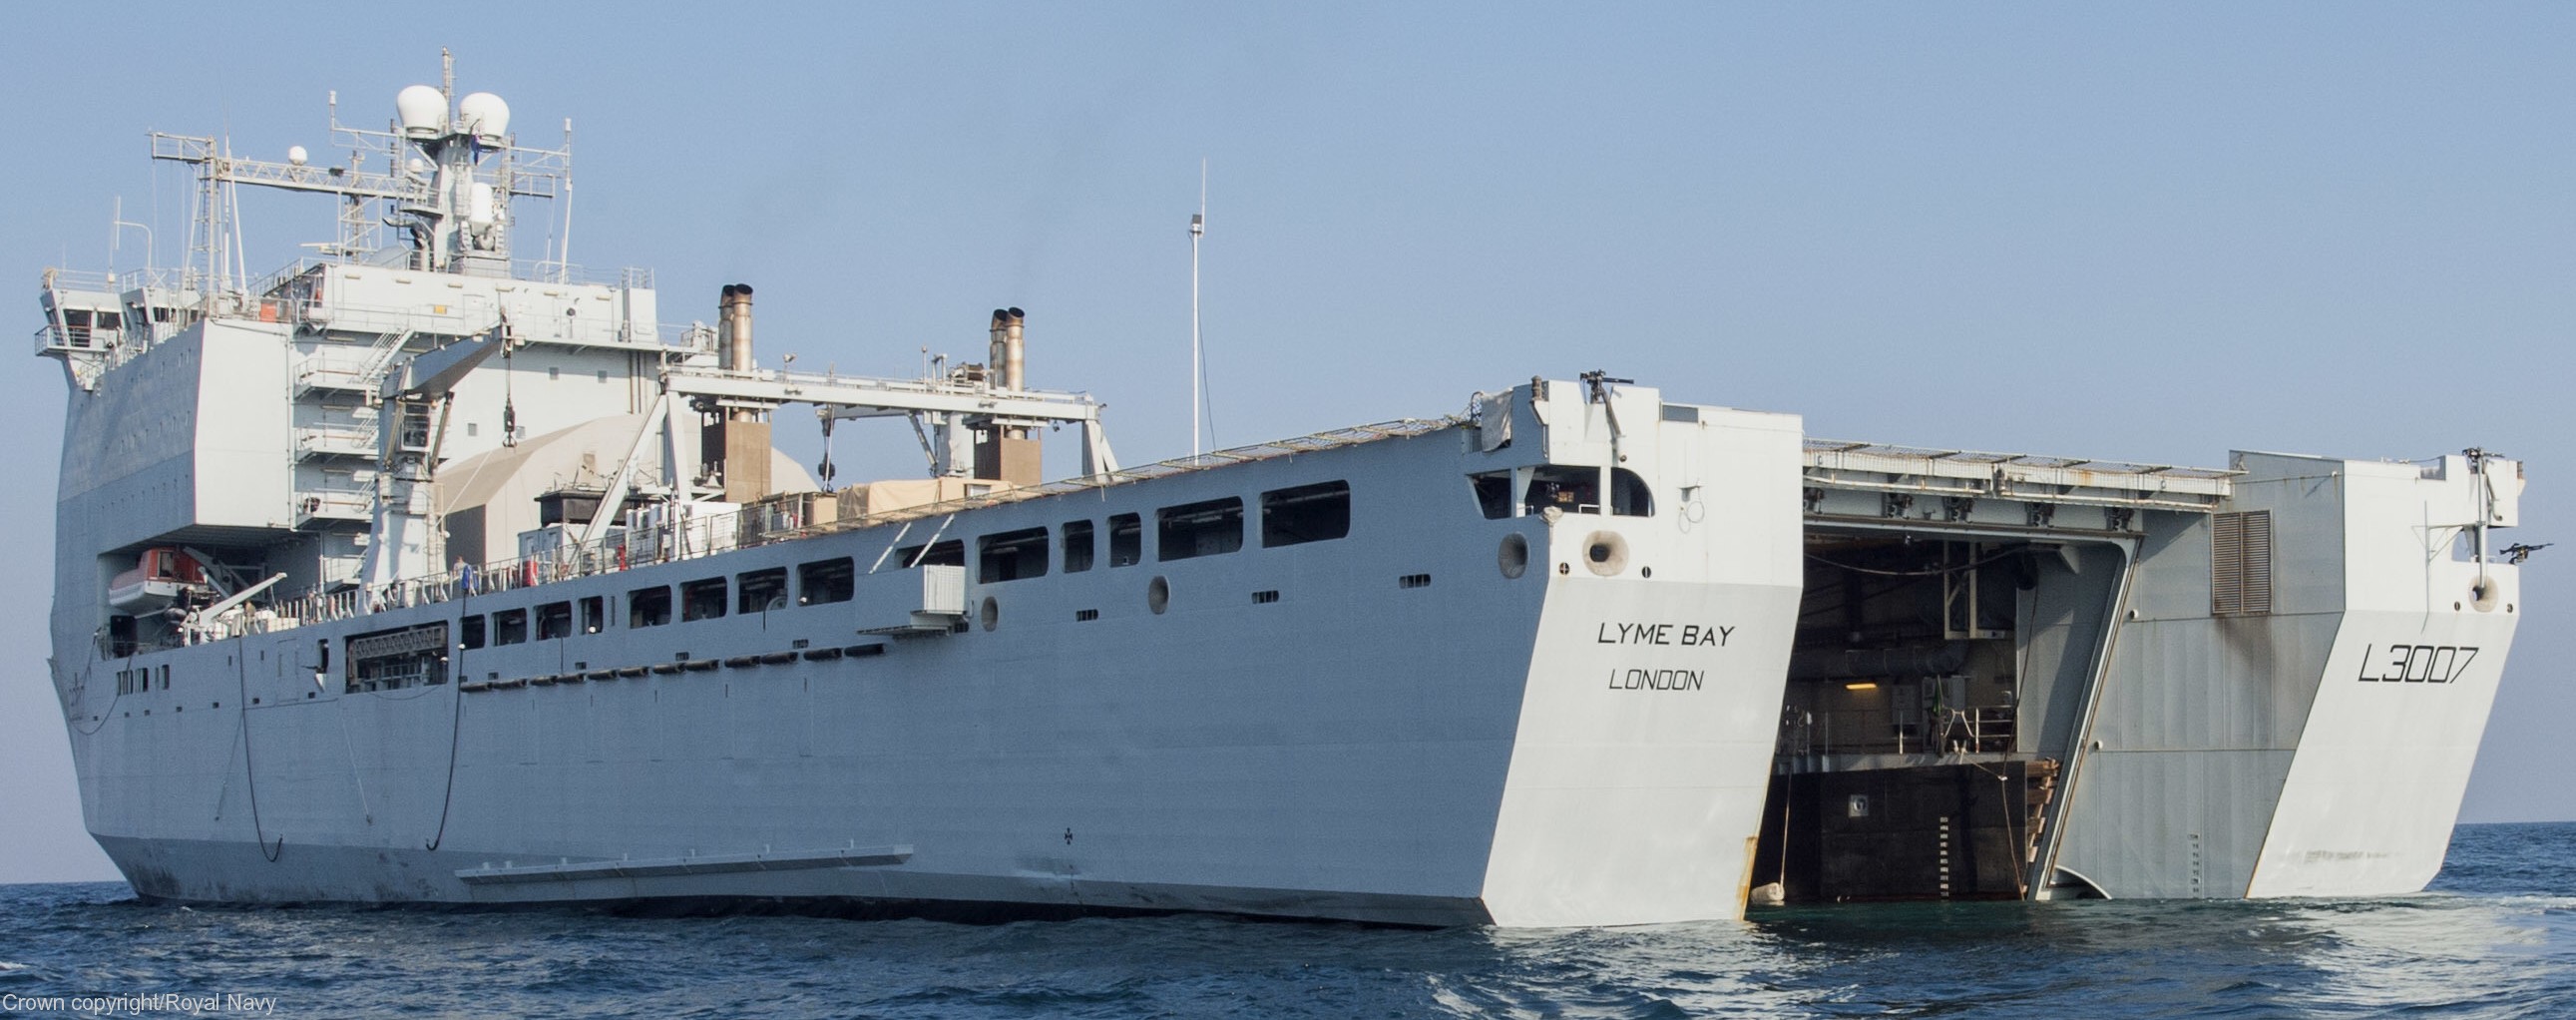 l-3007 rfa lyme bay dock landing ship royal fleet auxilary navy 37